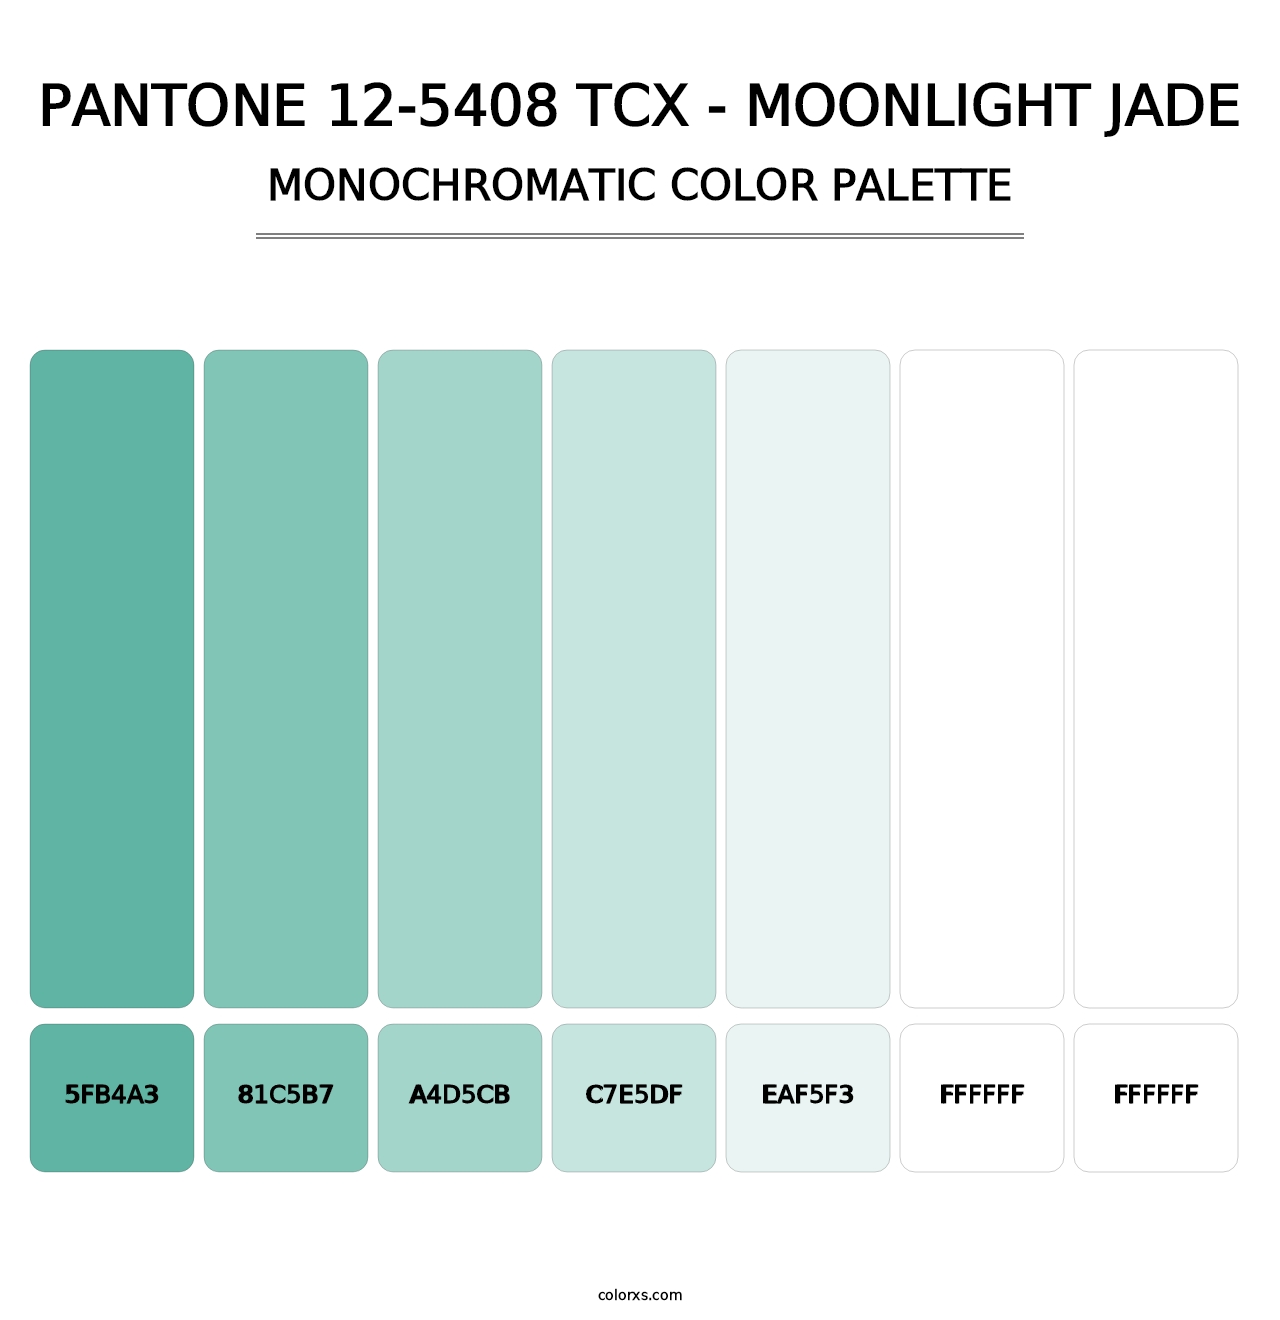 PANTONE 12-5408 TCX - Moonlight Jade - Monochromatic Color Palette